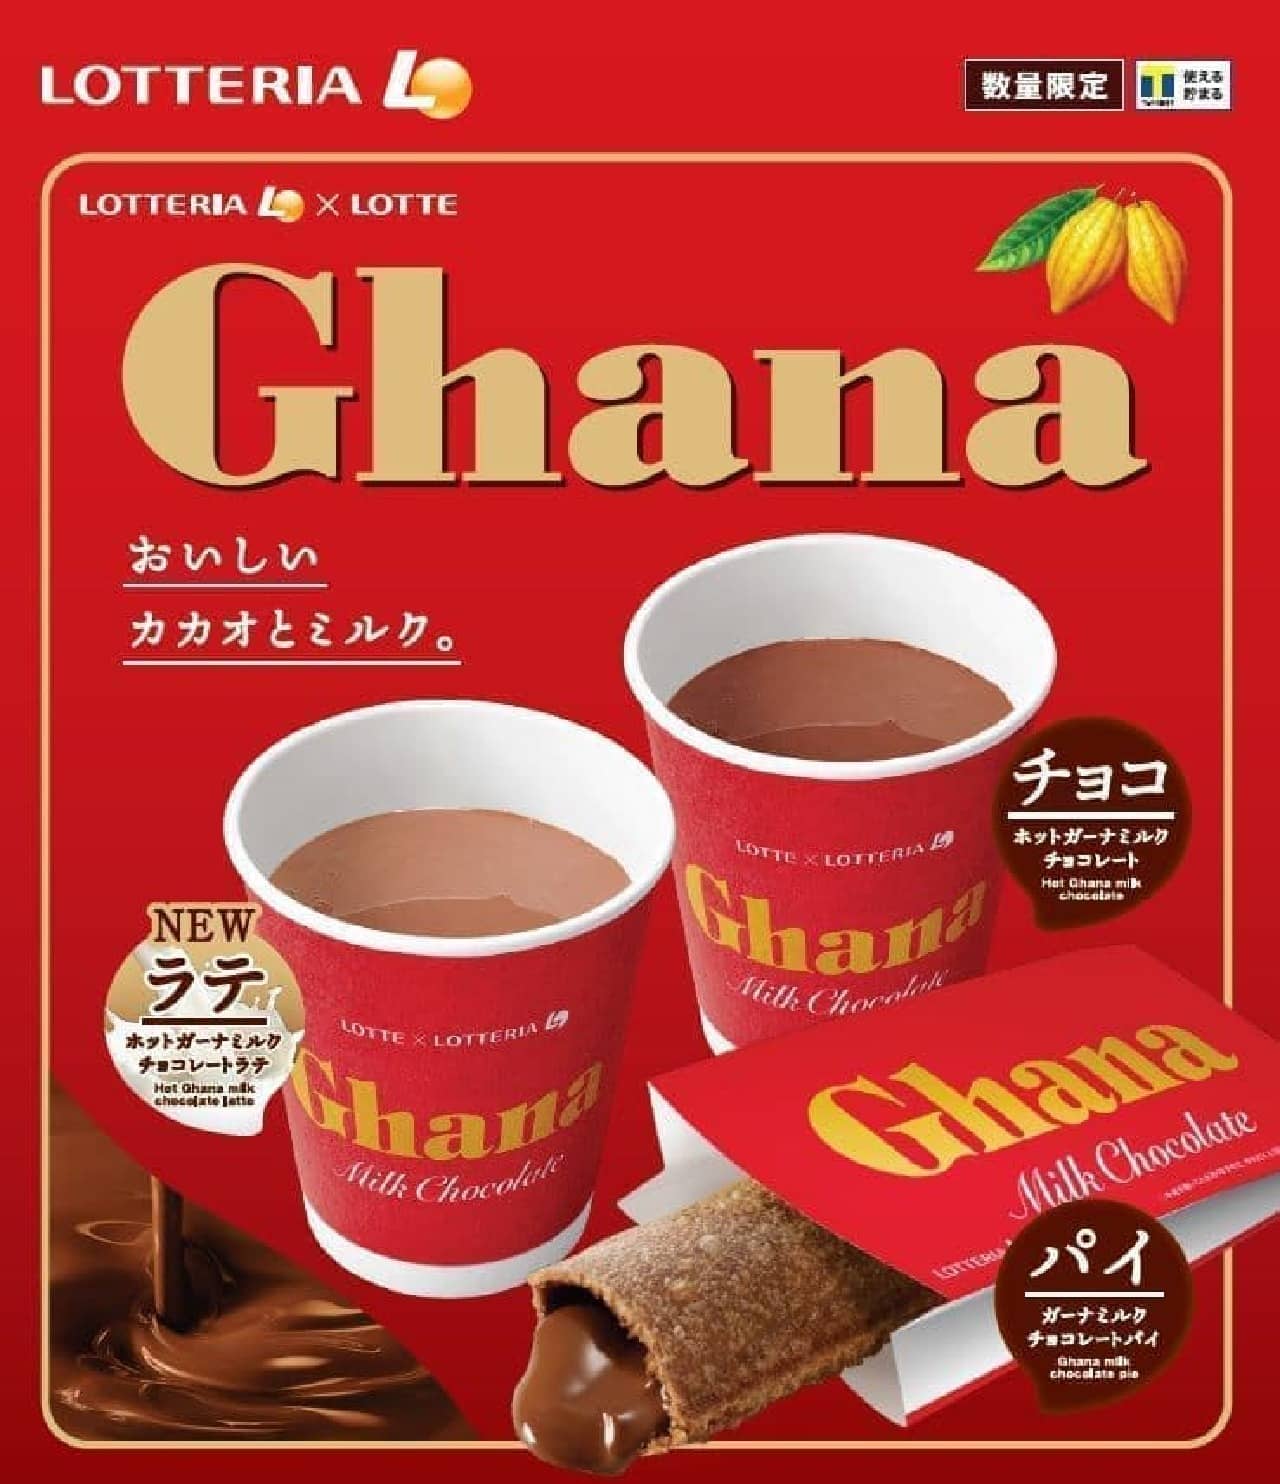 Lotteria "Hot Ghana Milk Chocolate" "Hot Ghana Milk Chocolate Latte" "Ghana Milk Chocolate Pie"